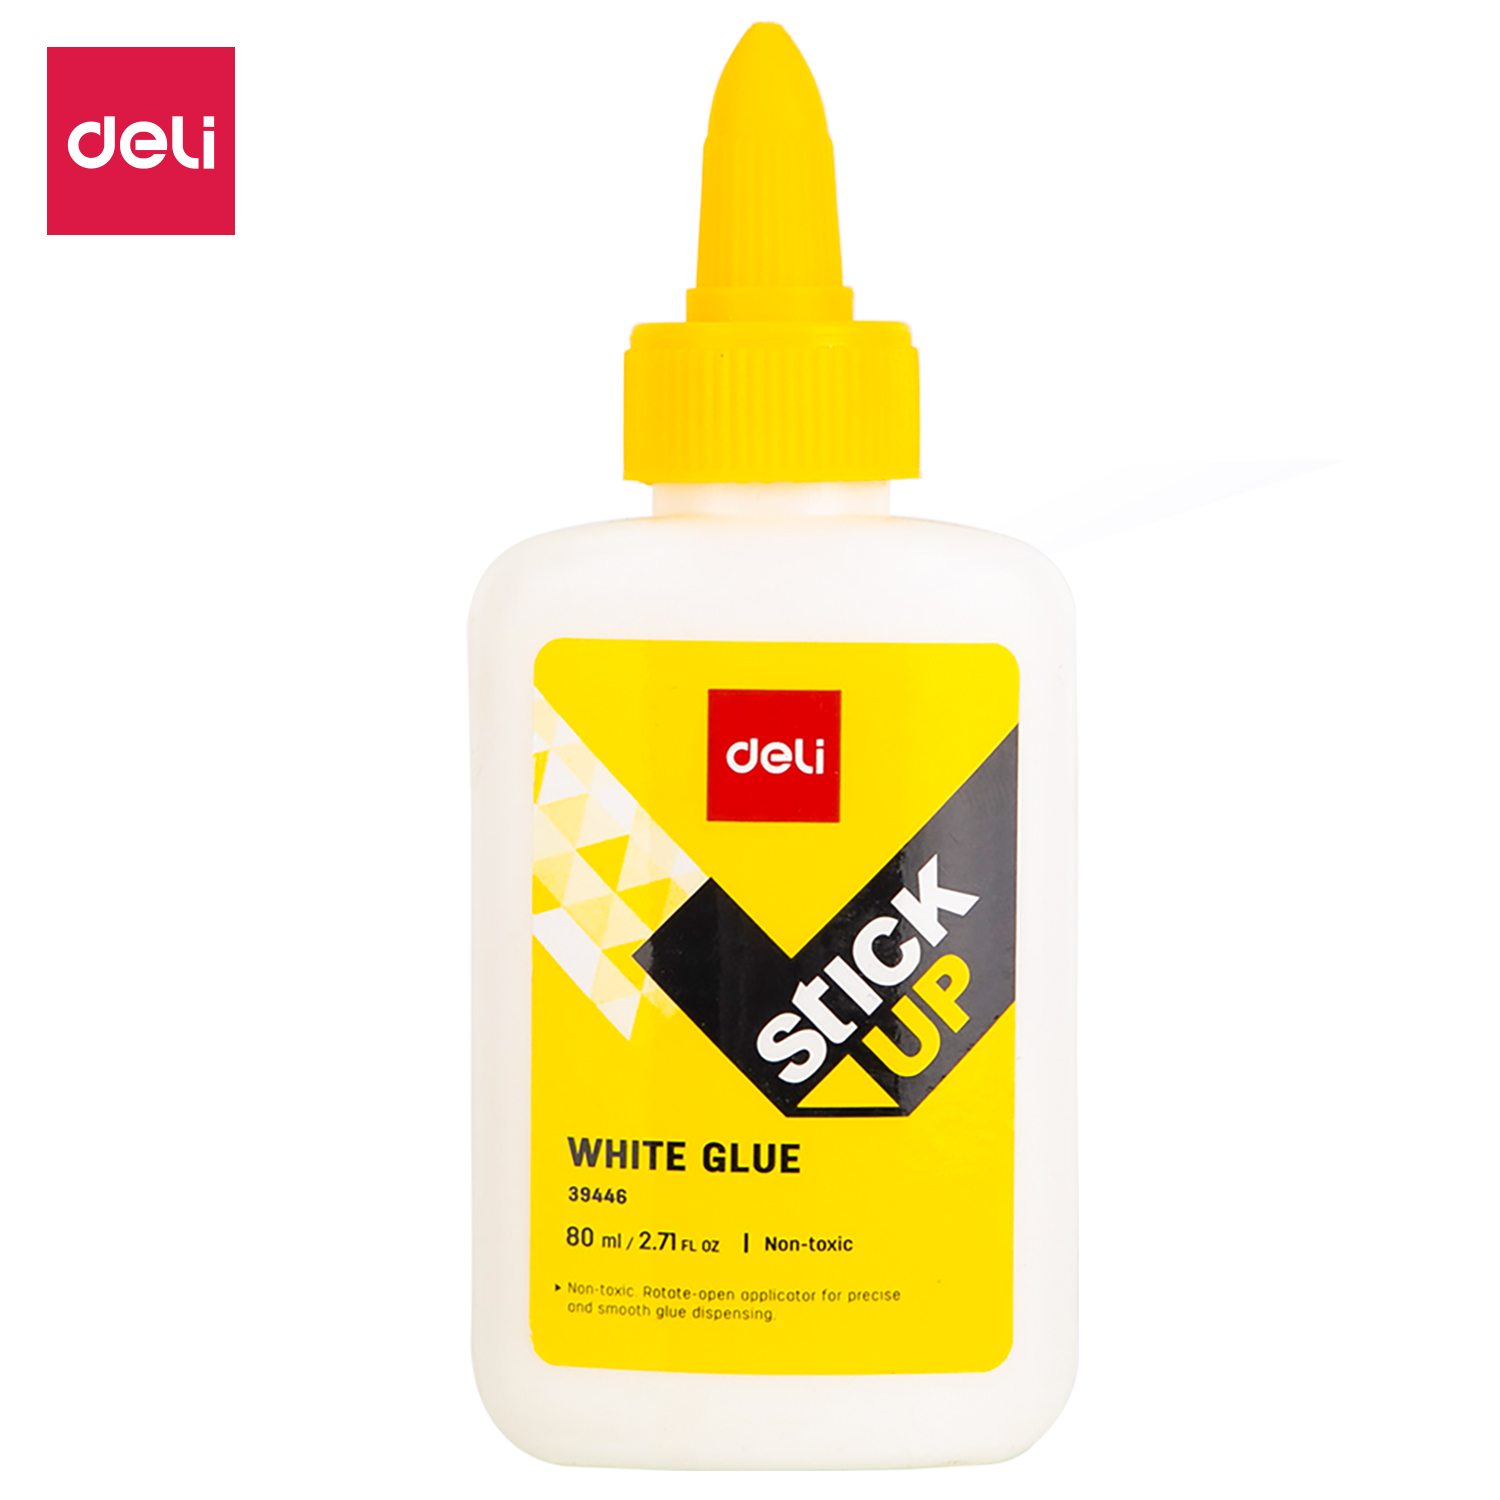 Deli-E39446 White glue